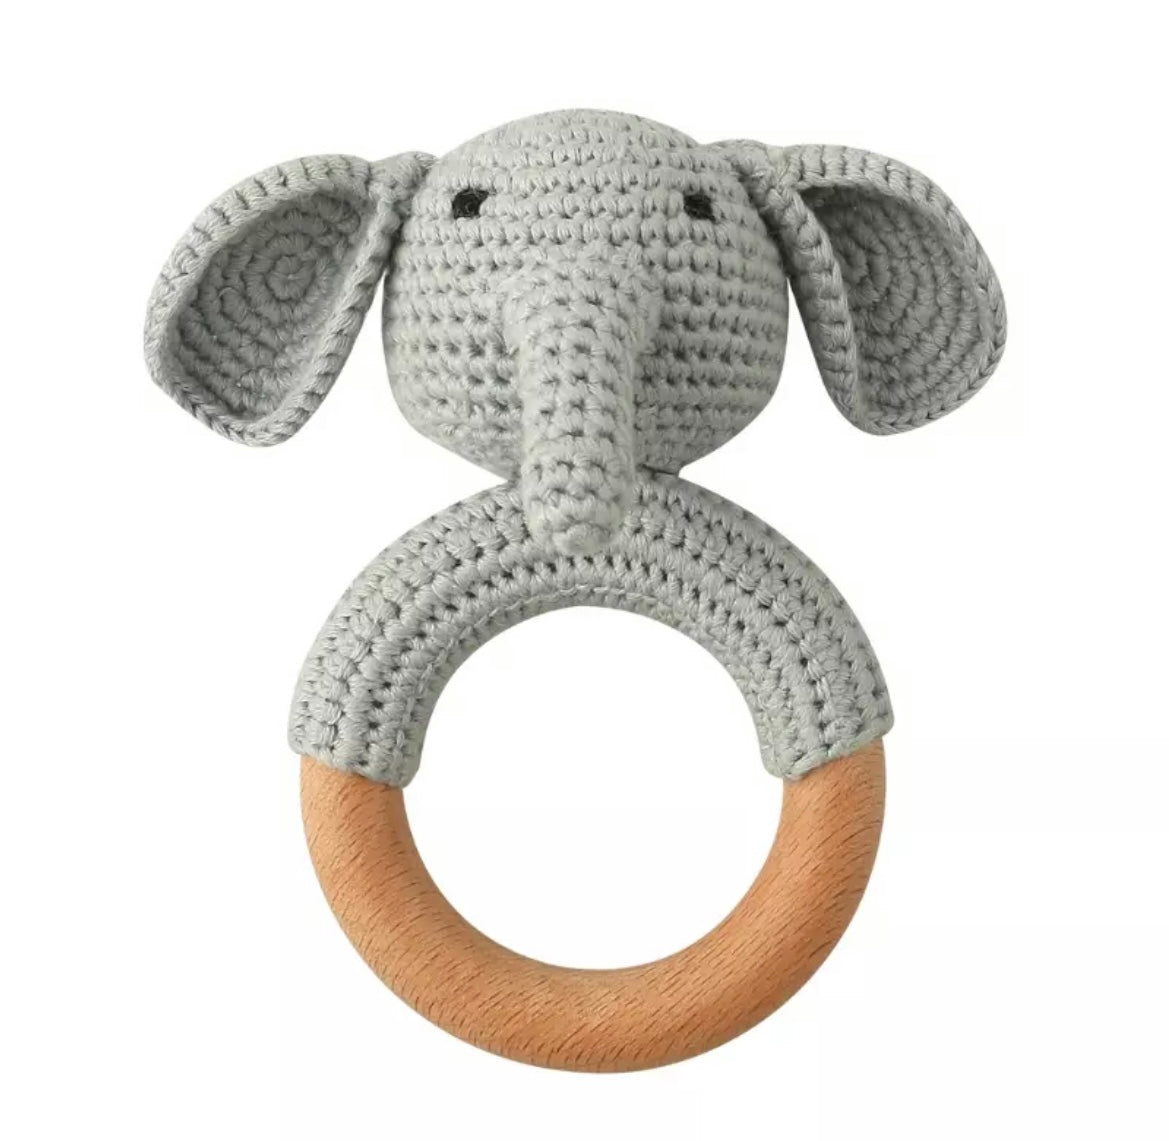 Hand Made Crochet Elephant.